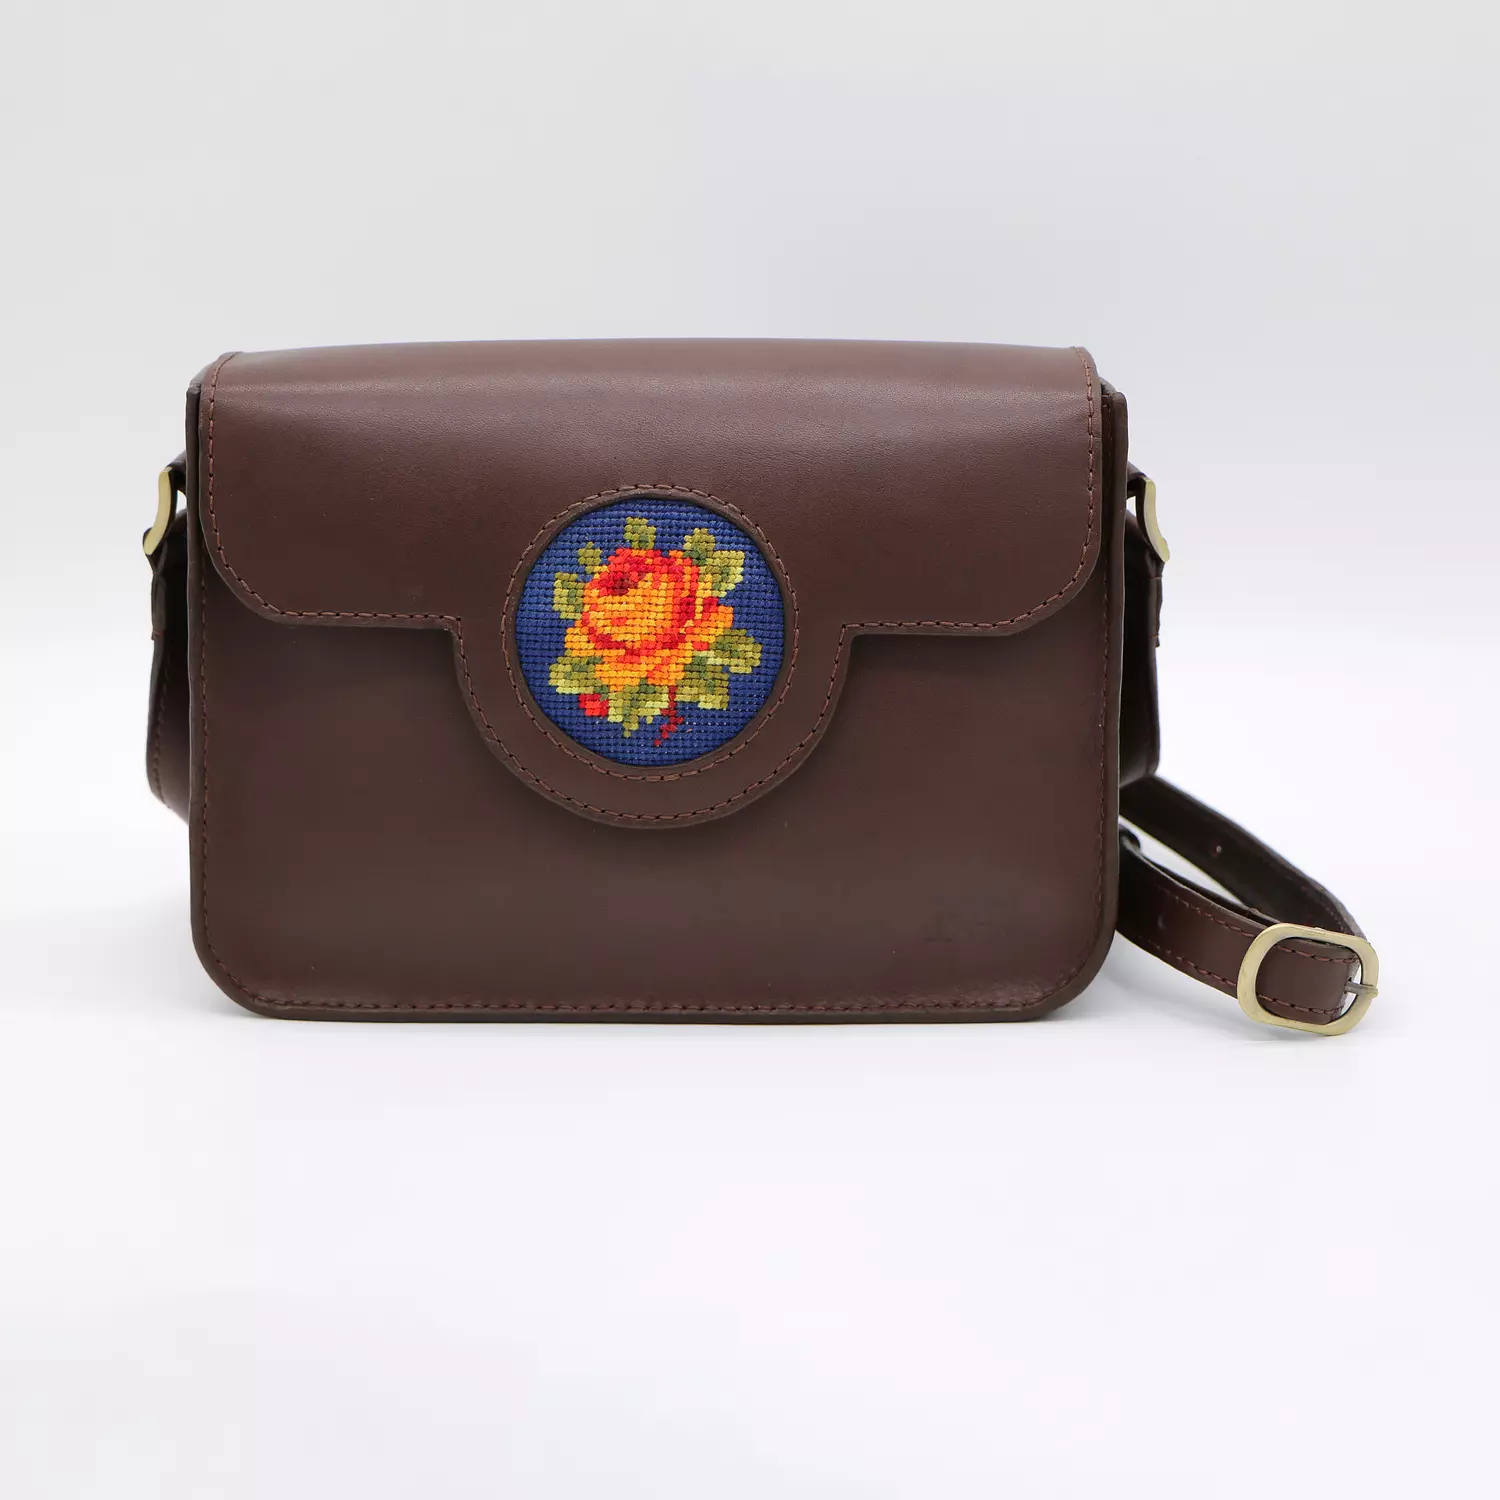   Genuine leather bag with floral design. hover image